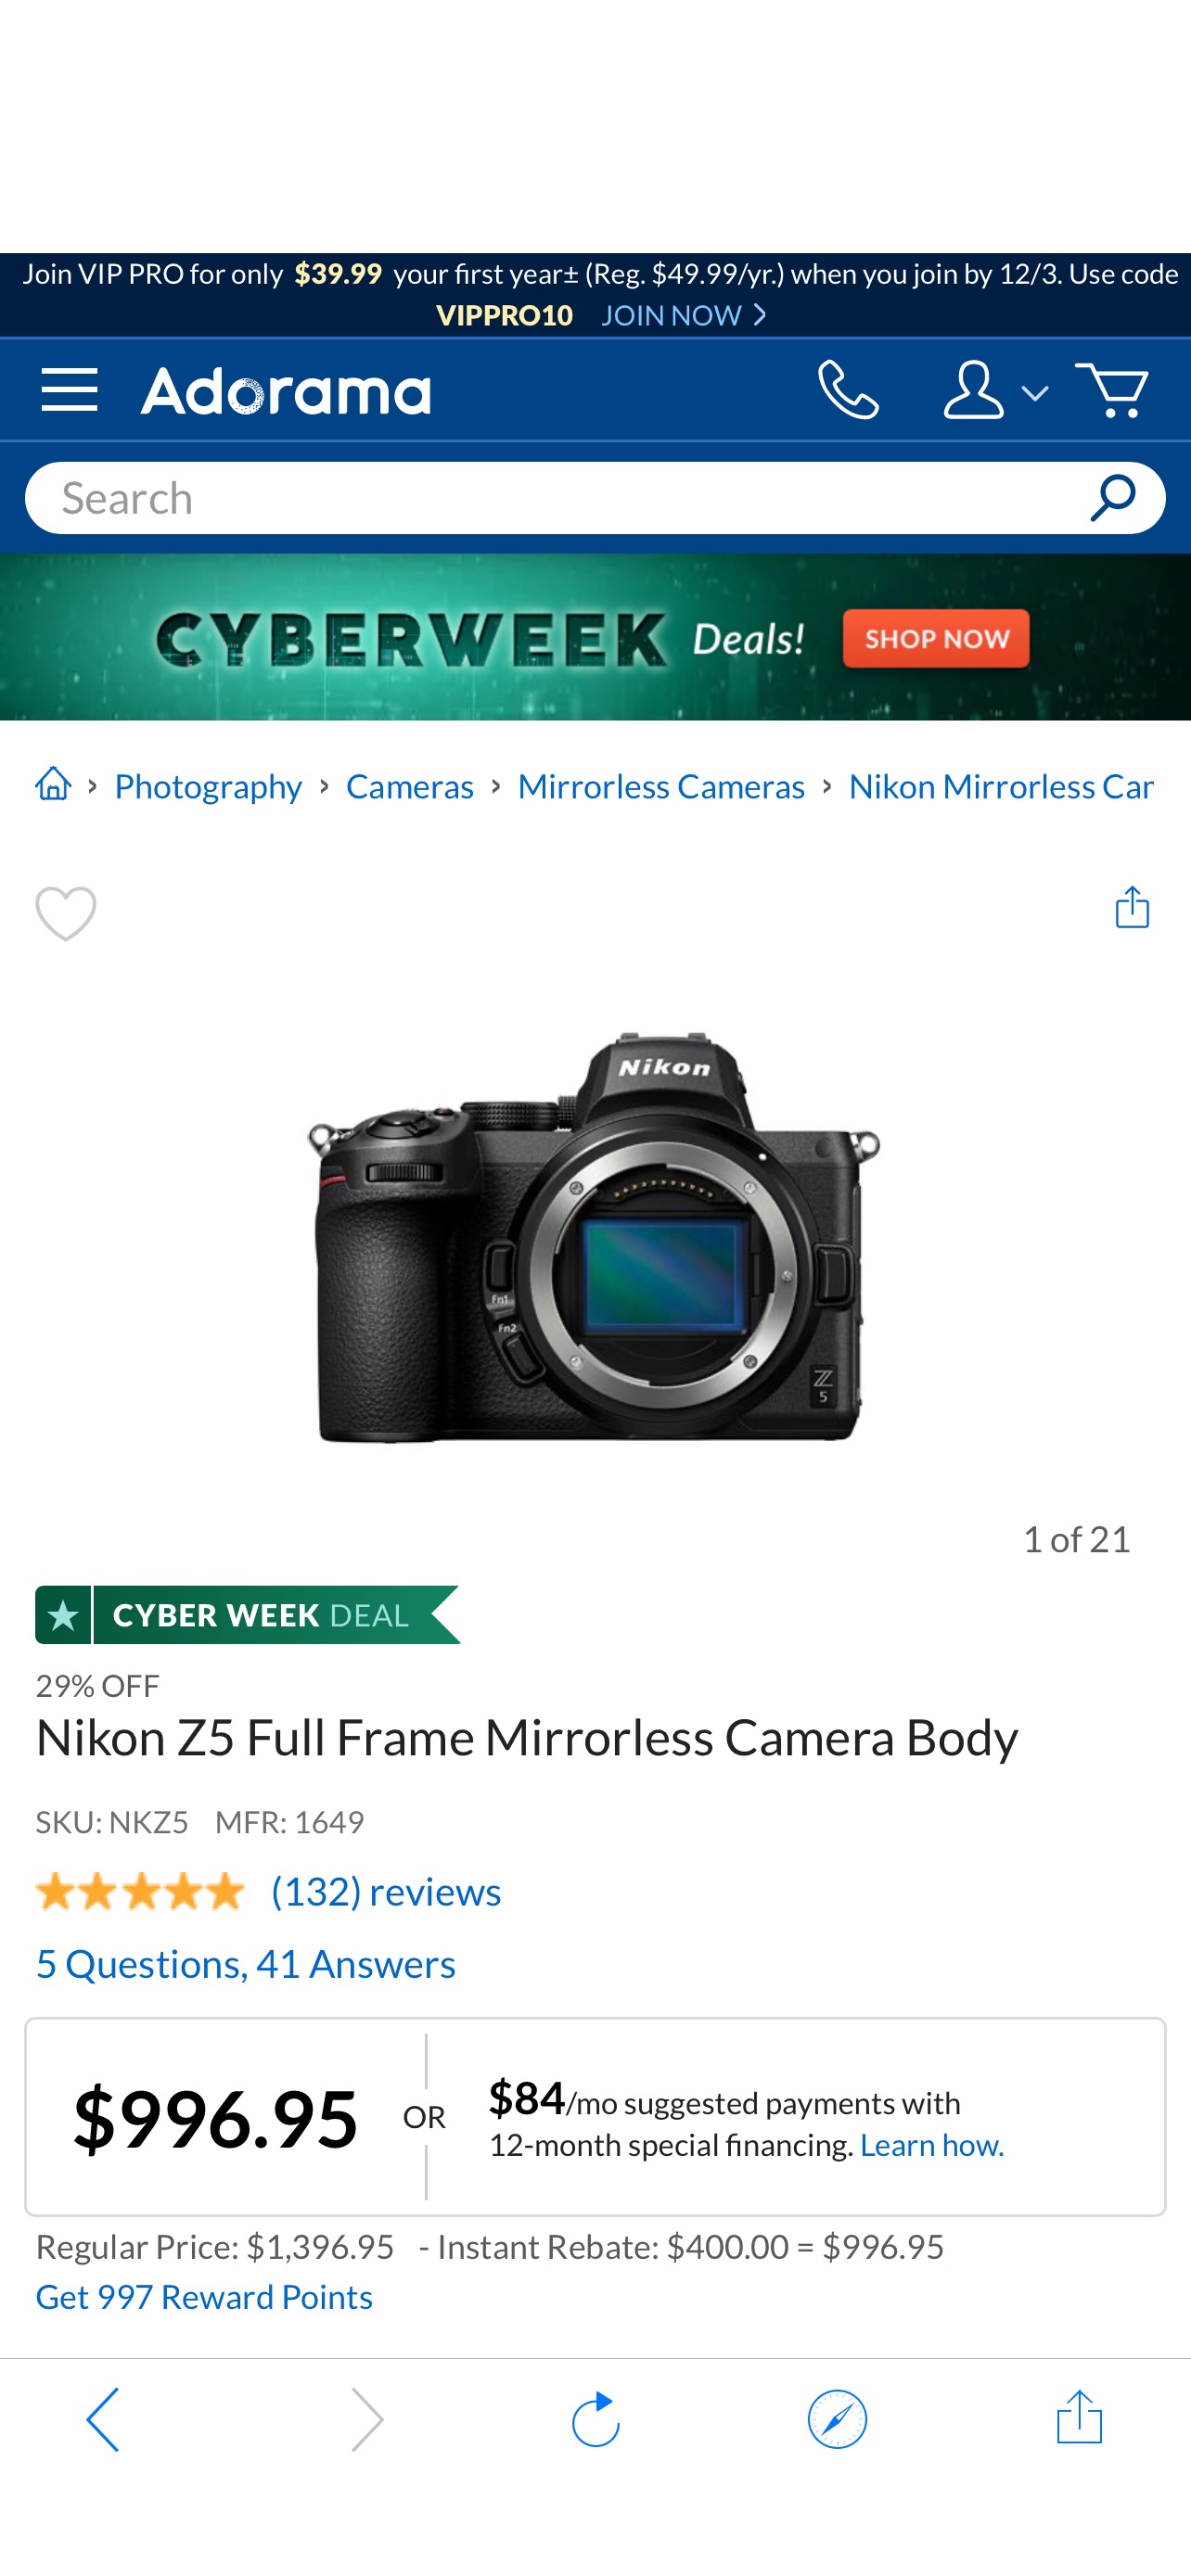 Nikon Z5 Full Frame Mirrorless Camera Body 1649 - Adorama